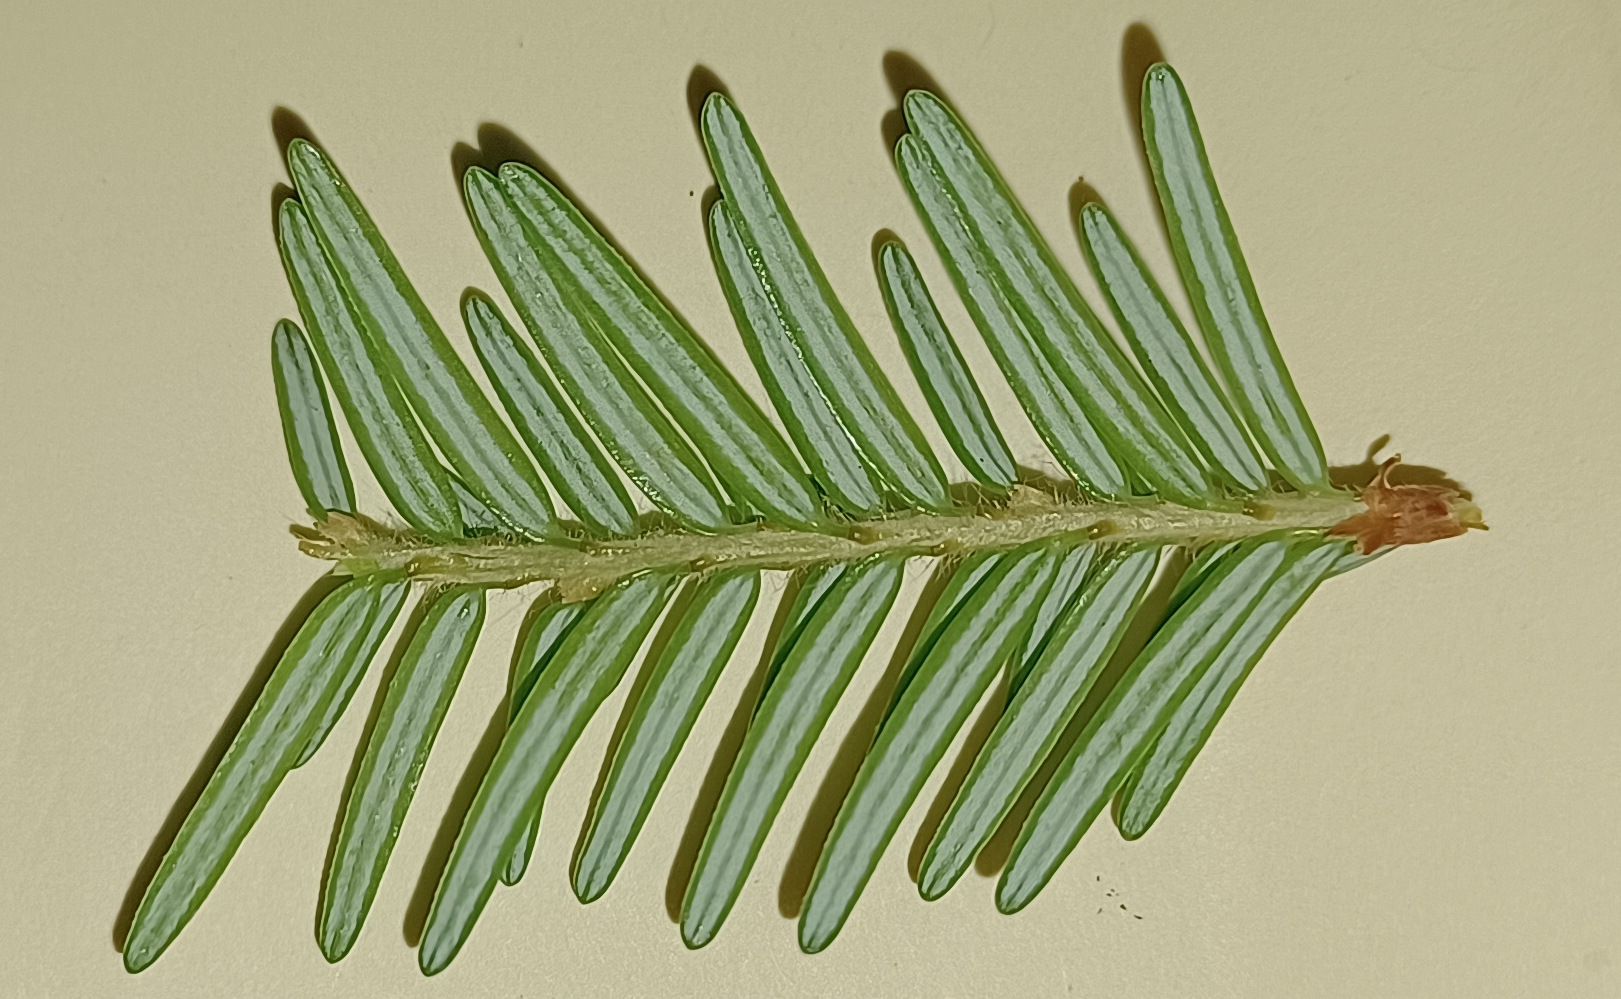 Underside of Picea engelmannii leaves.